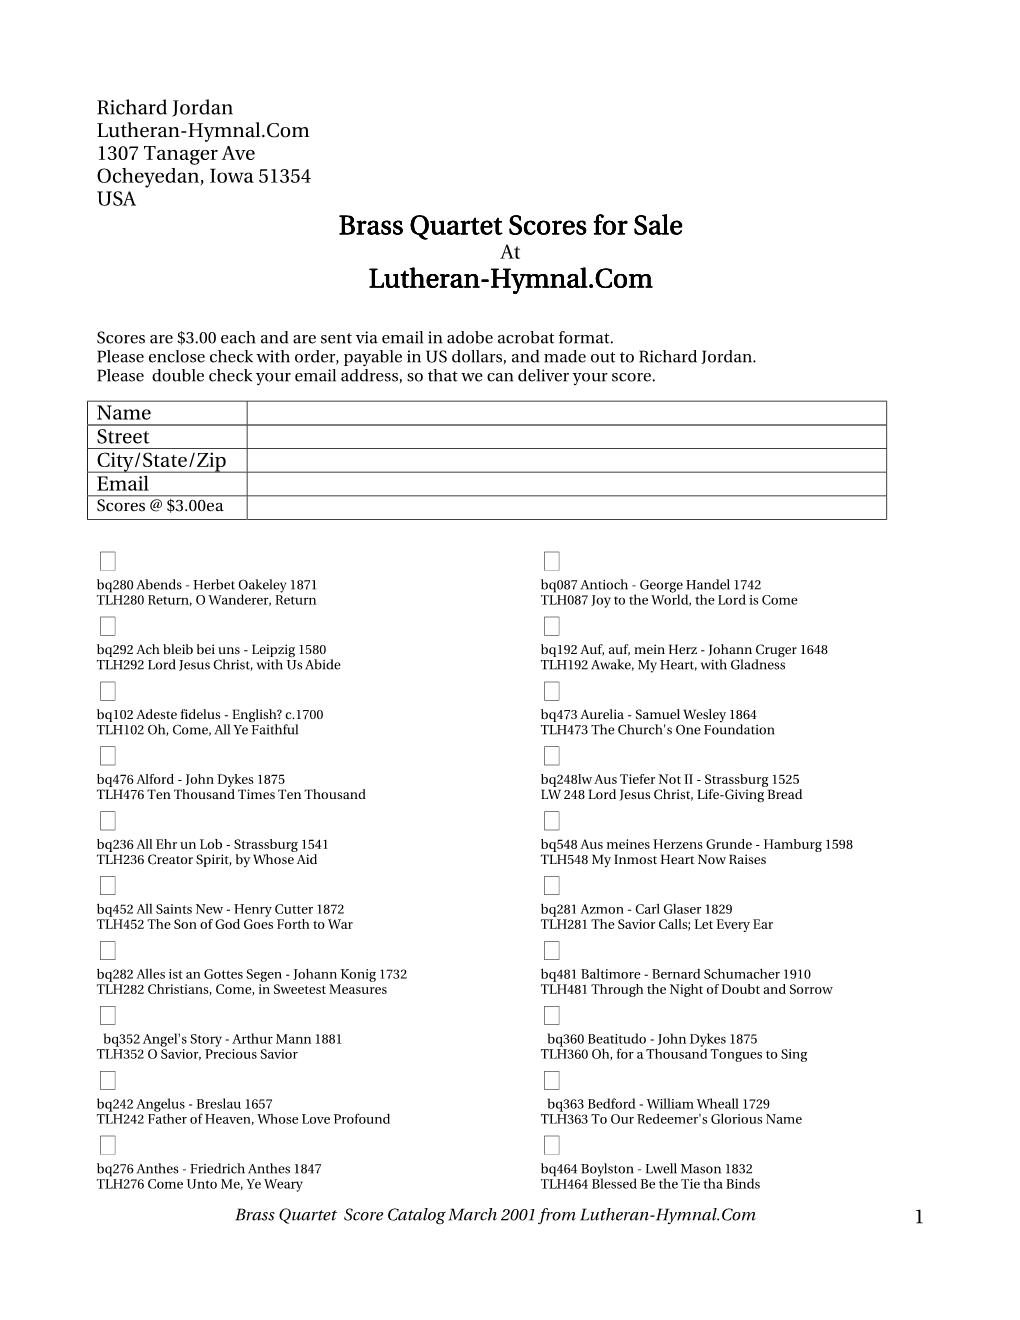 Brass Quartet Score Catalog